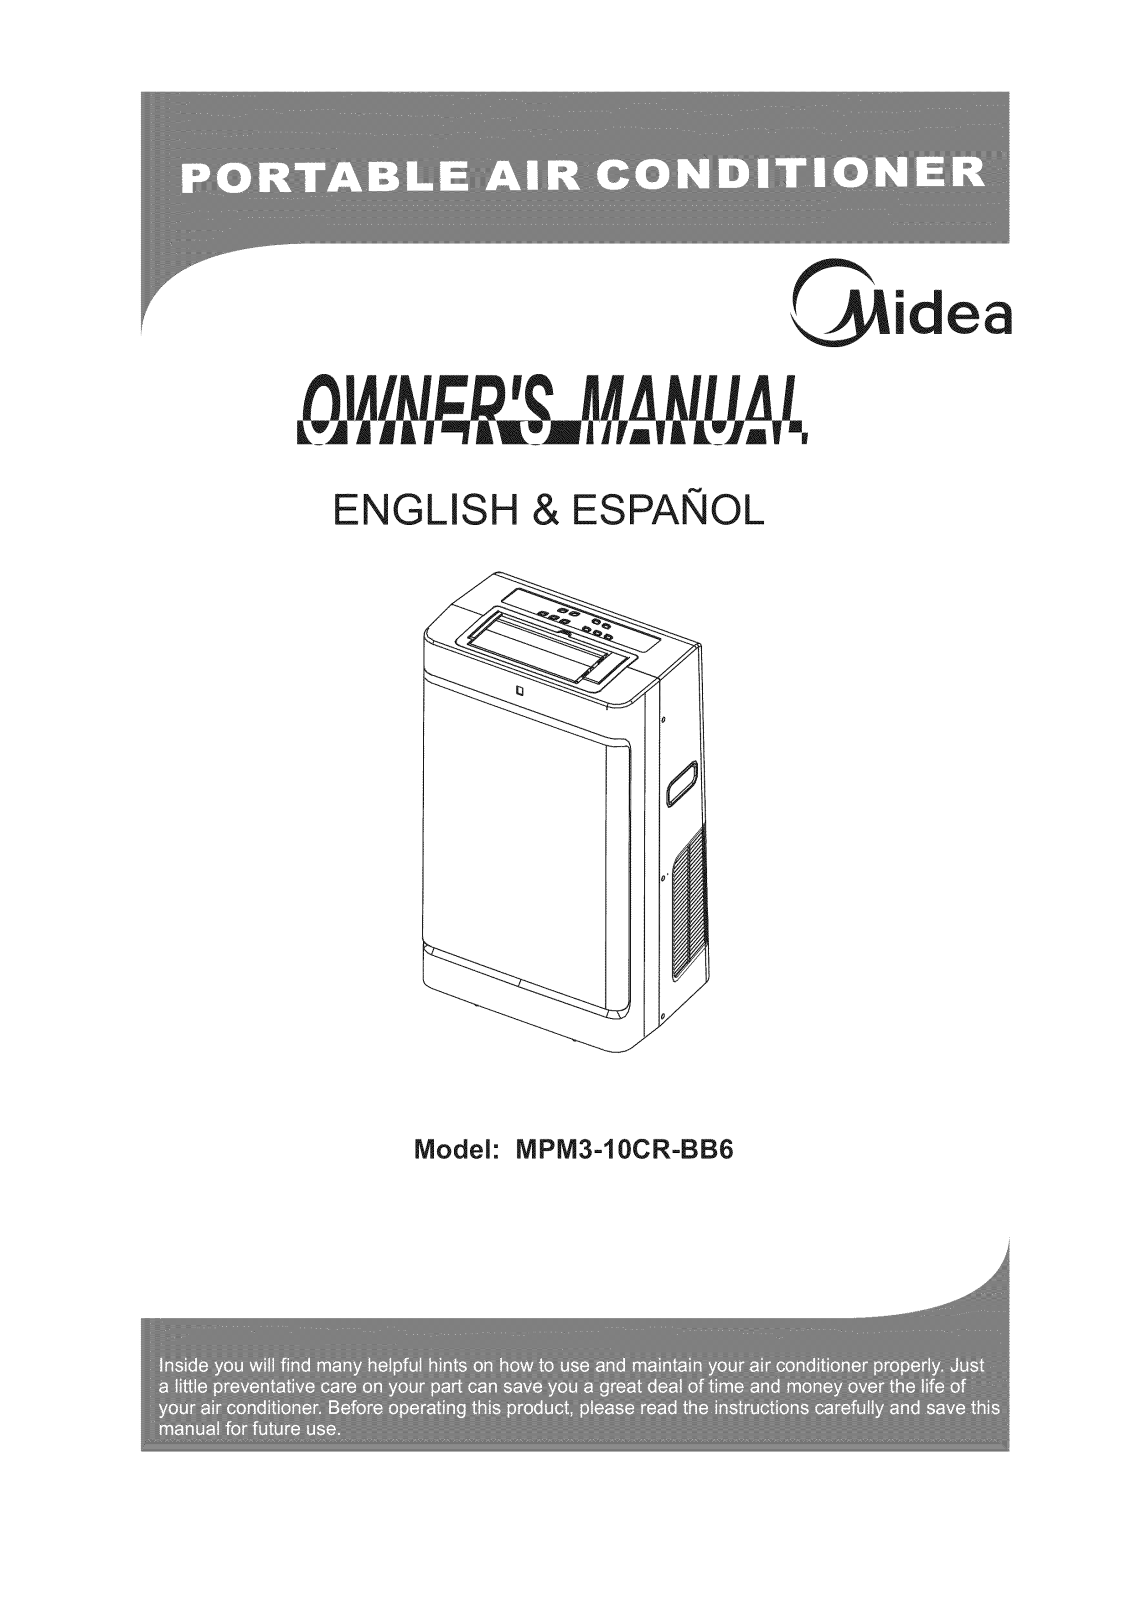 Midea MPM3-10CR-BB6 Owner’s Manual